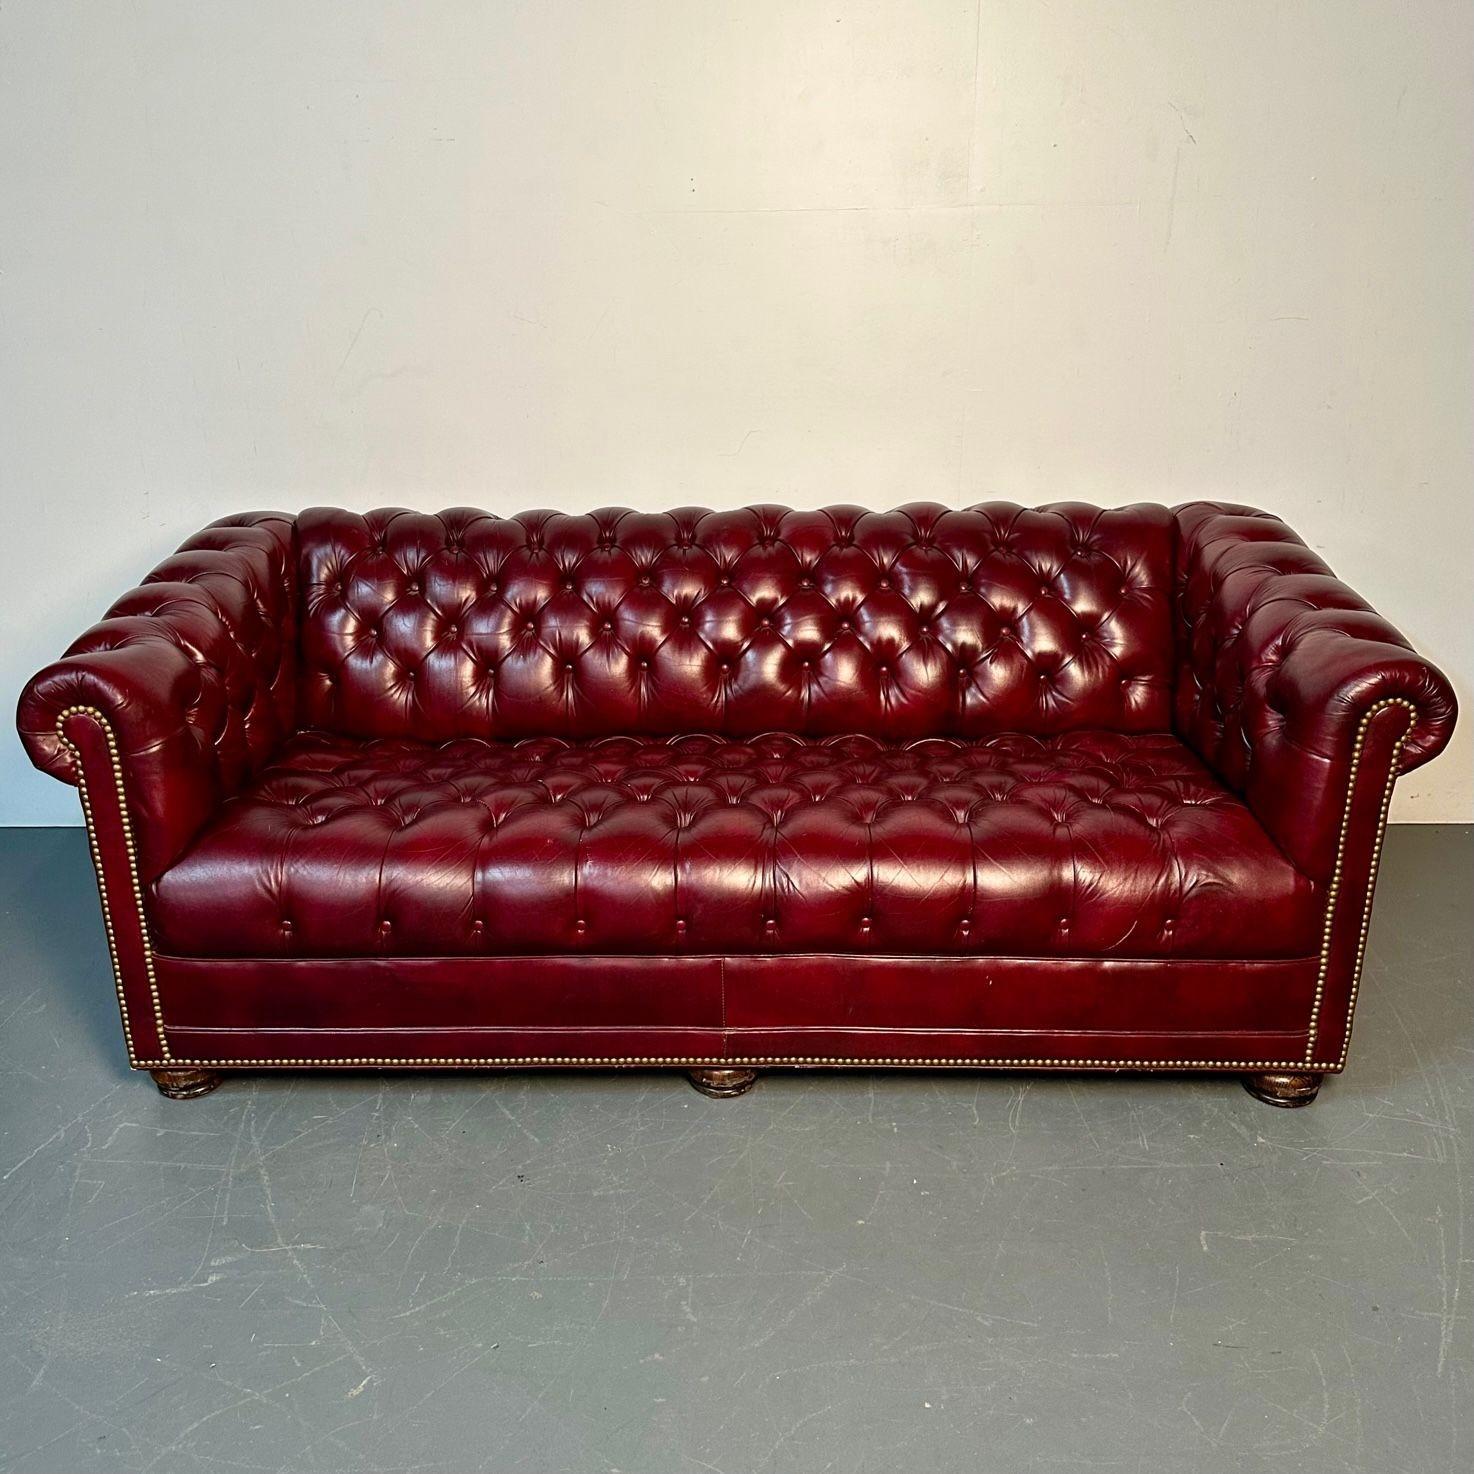 oxblood leather sofa